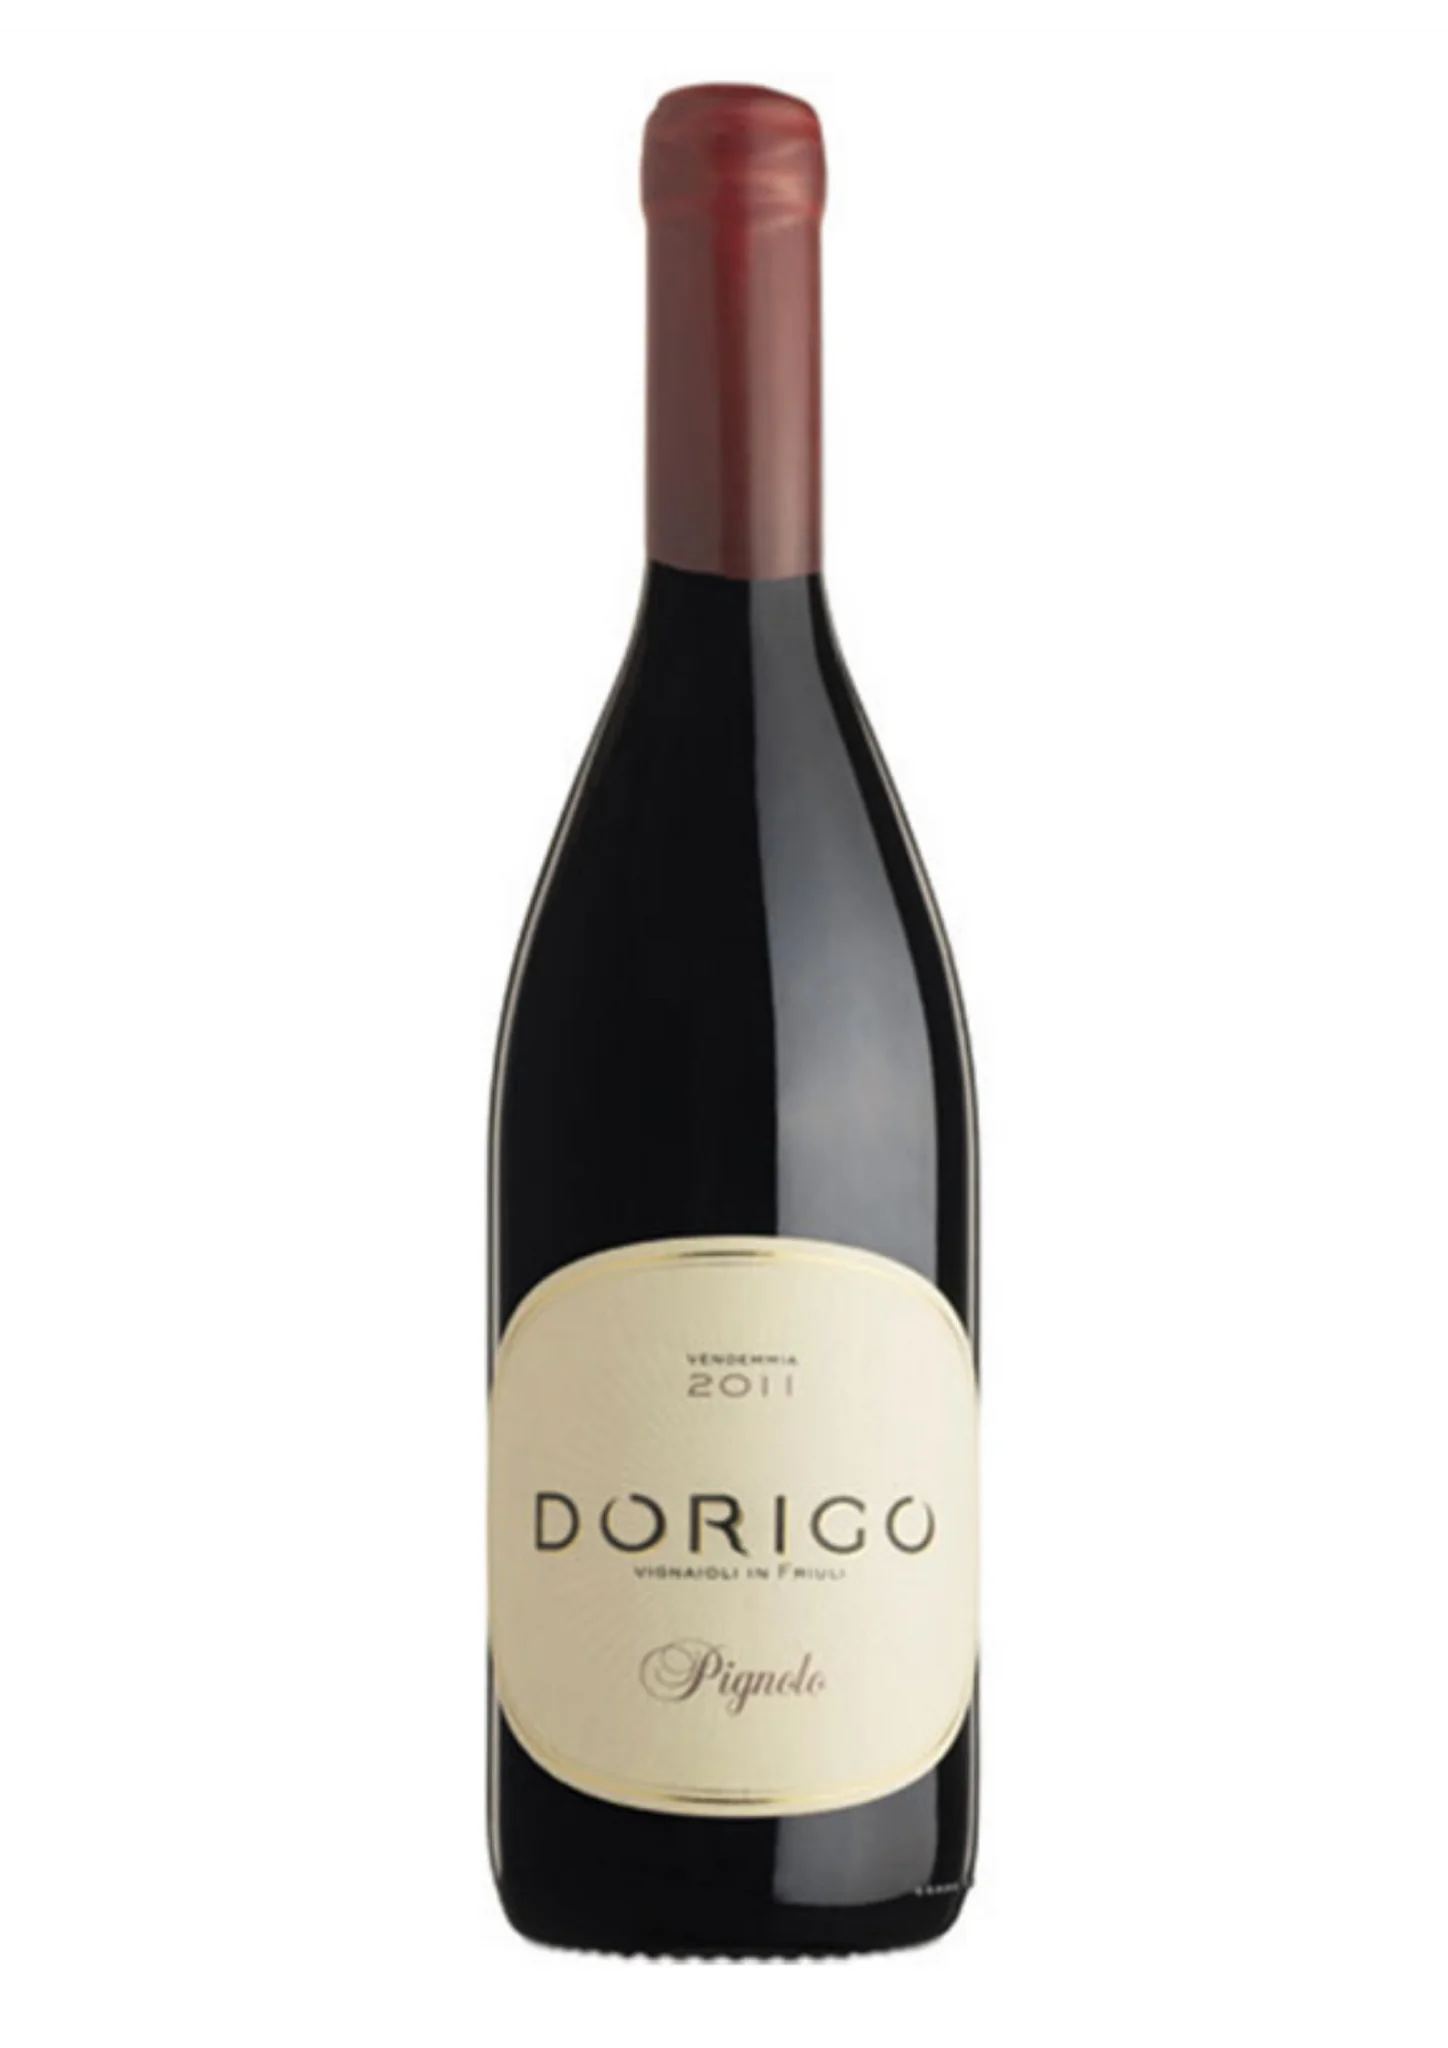 Bottle of Dorigo Pignolo from search results